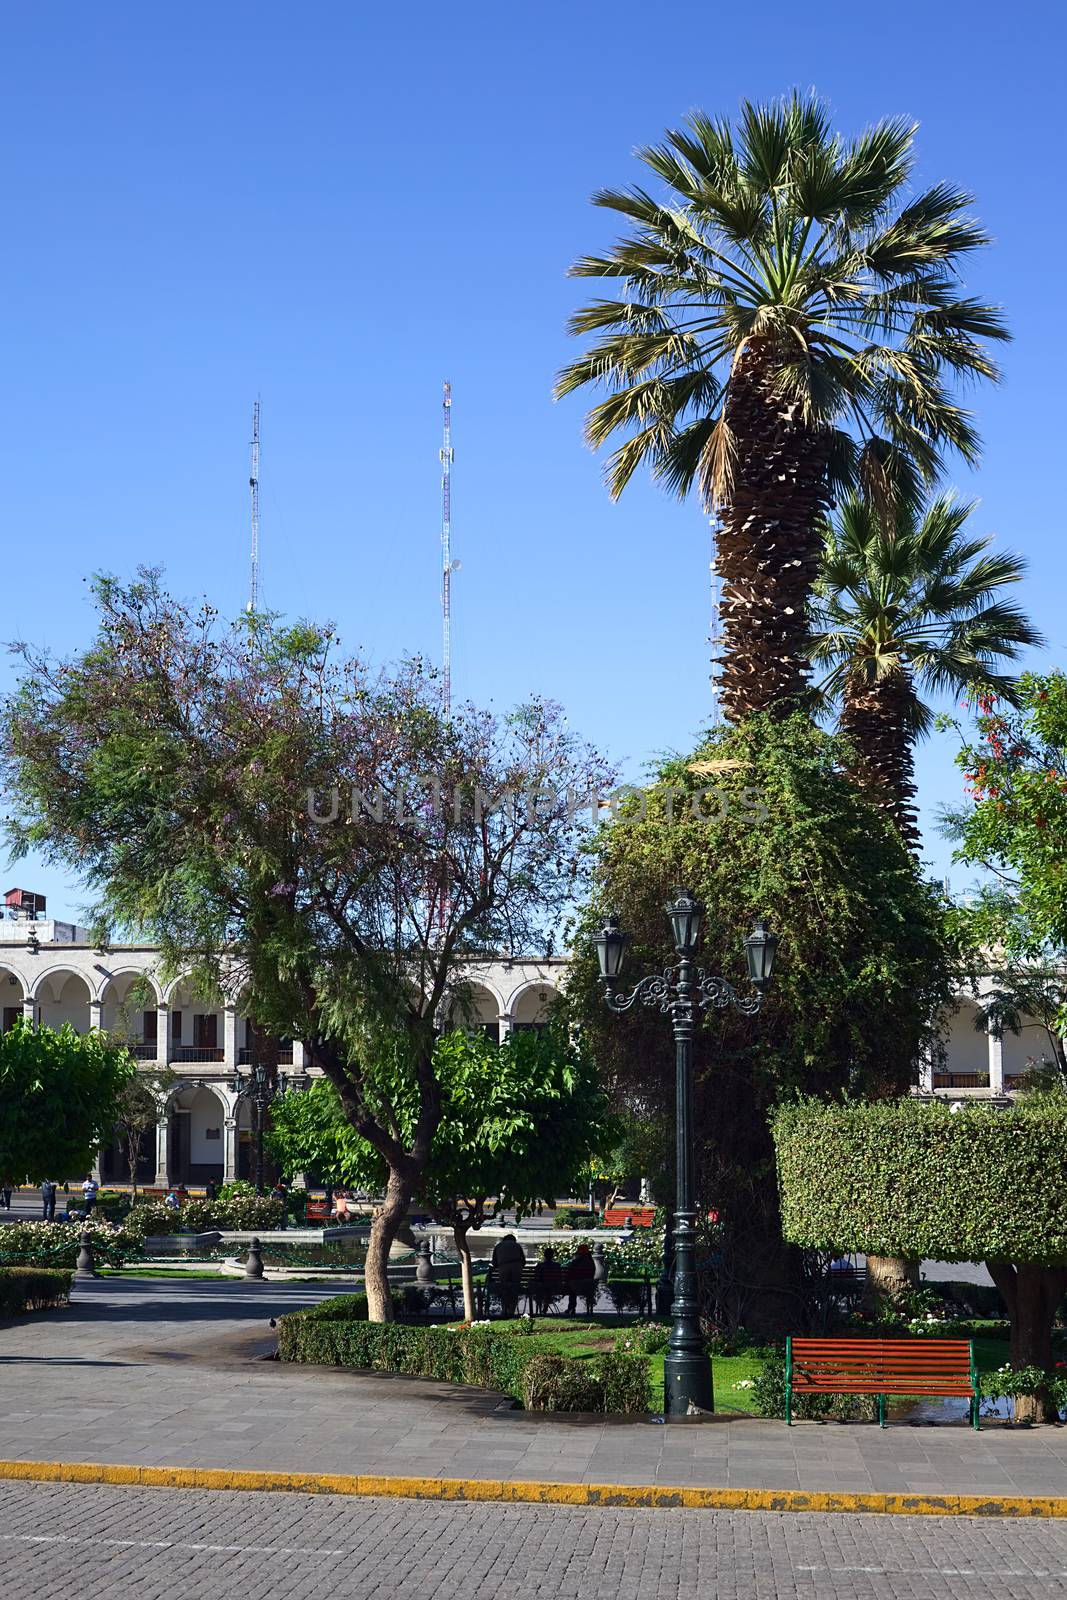 Plaza de Armas (Main Square) in Arequipa, Peru by sven